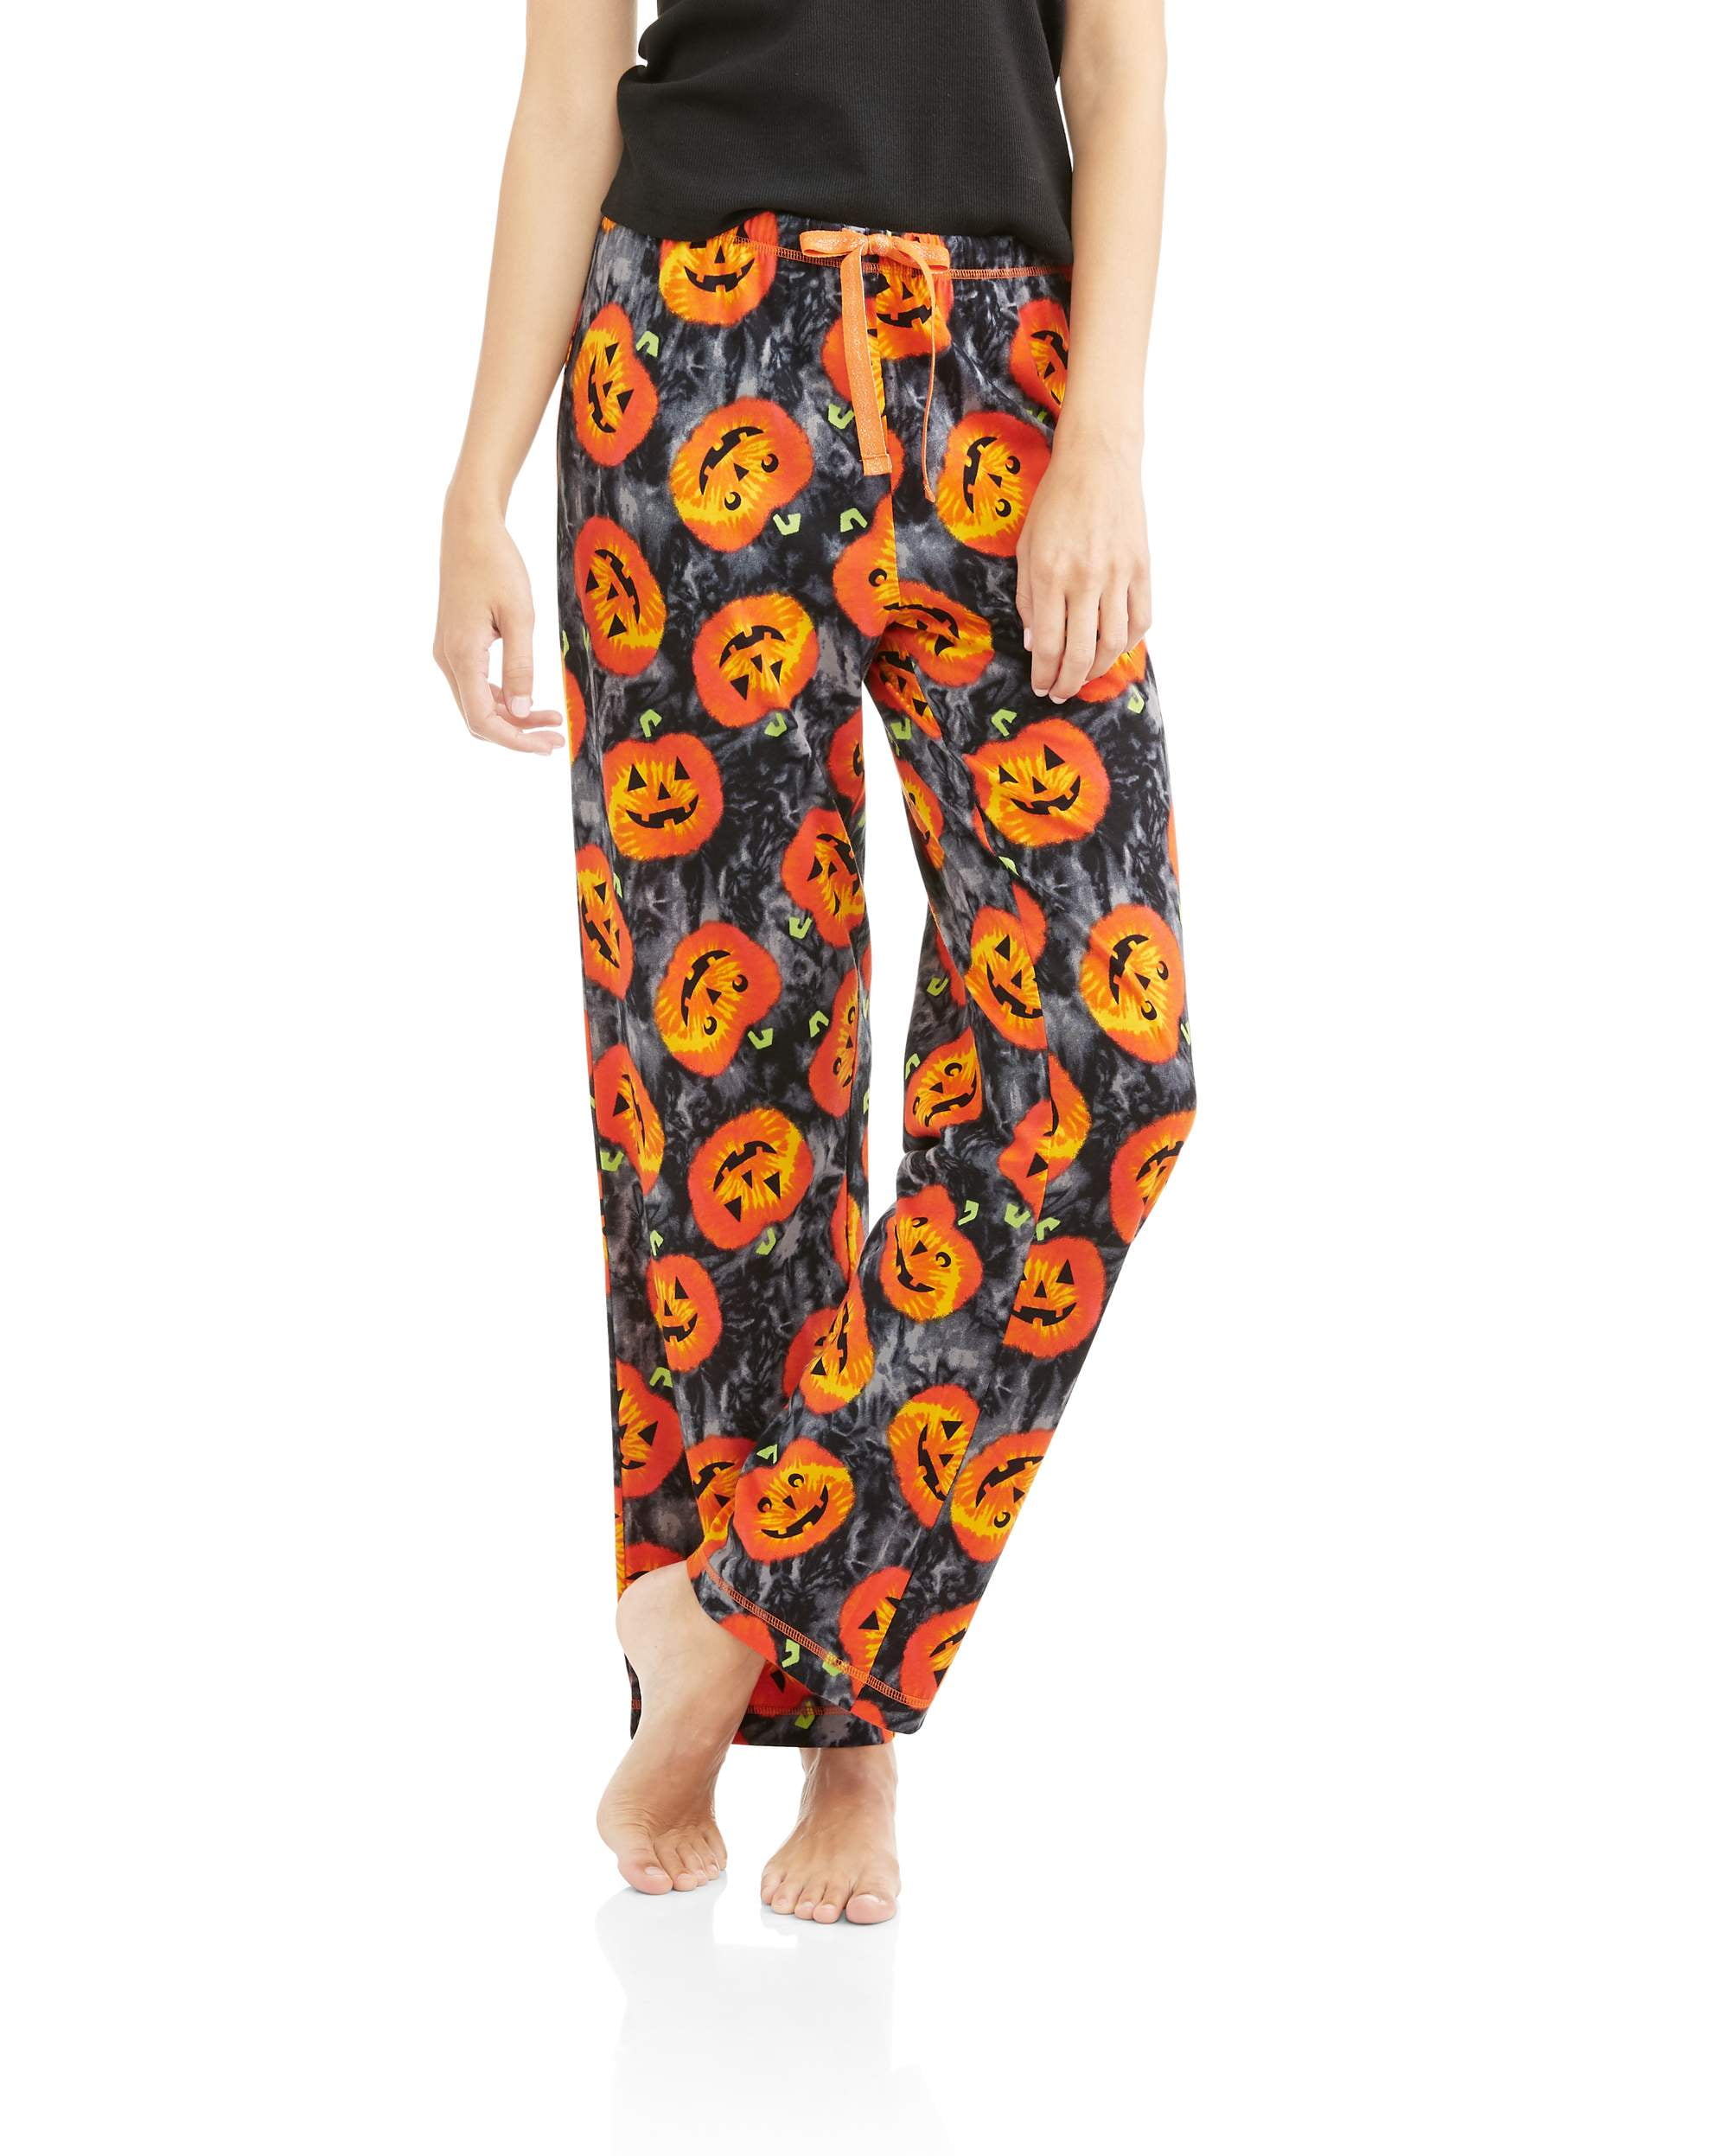 Unbranded women's pajama halloween jersey sleep pants (sizes s